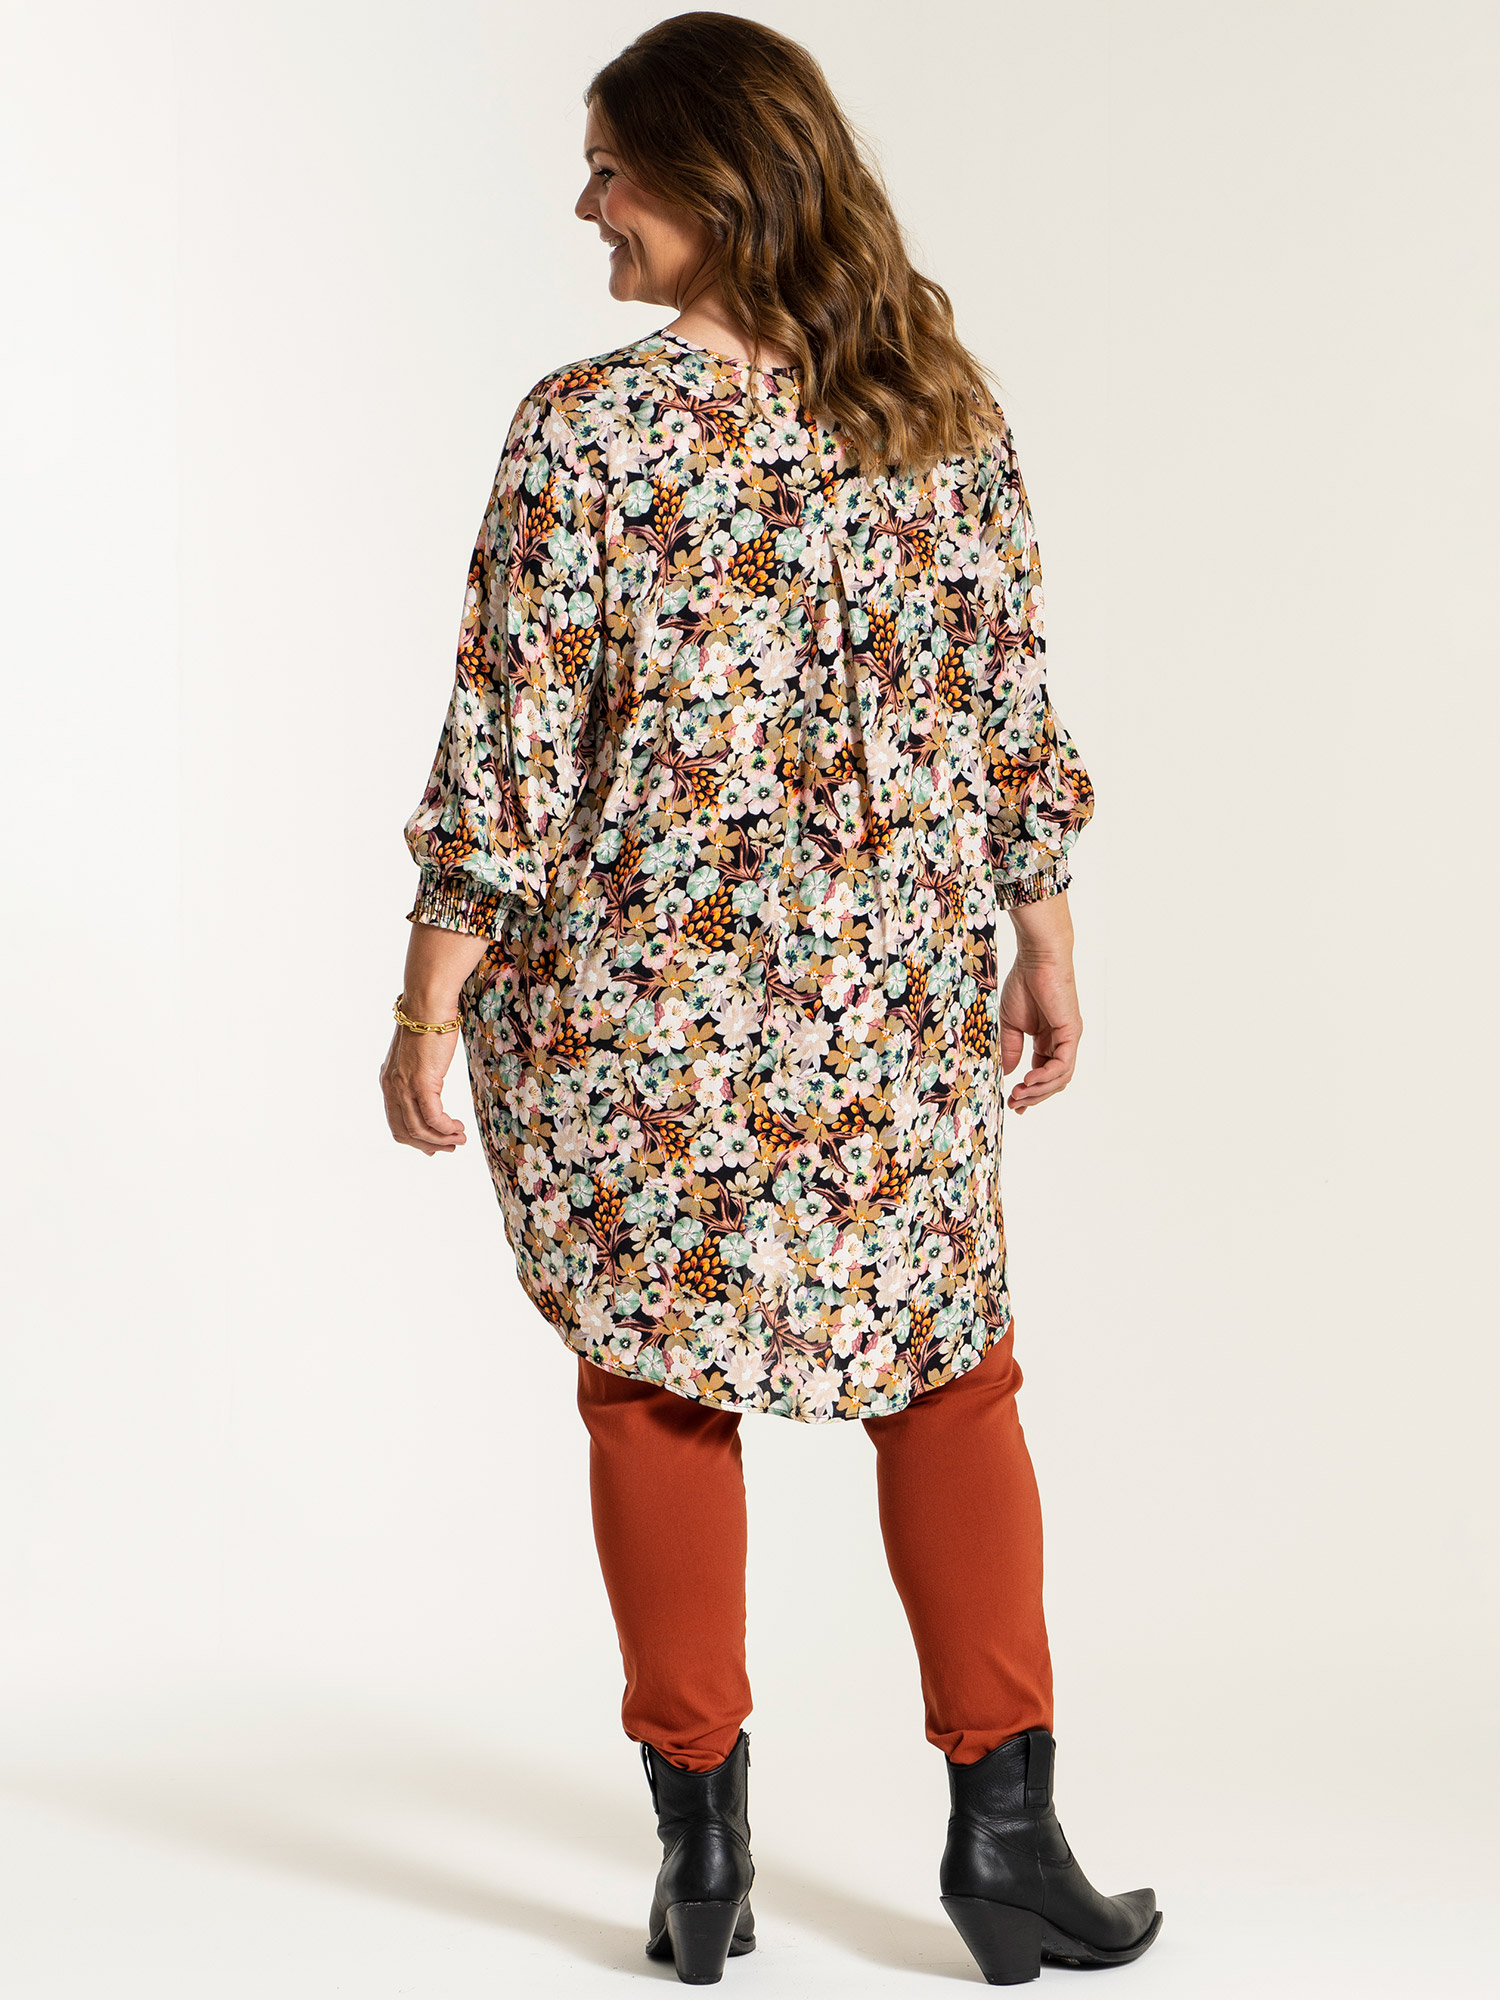 SAMIRA - Viskose tunika i print fra Gozzip